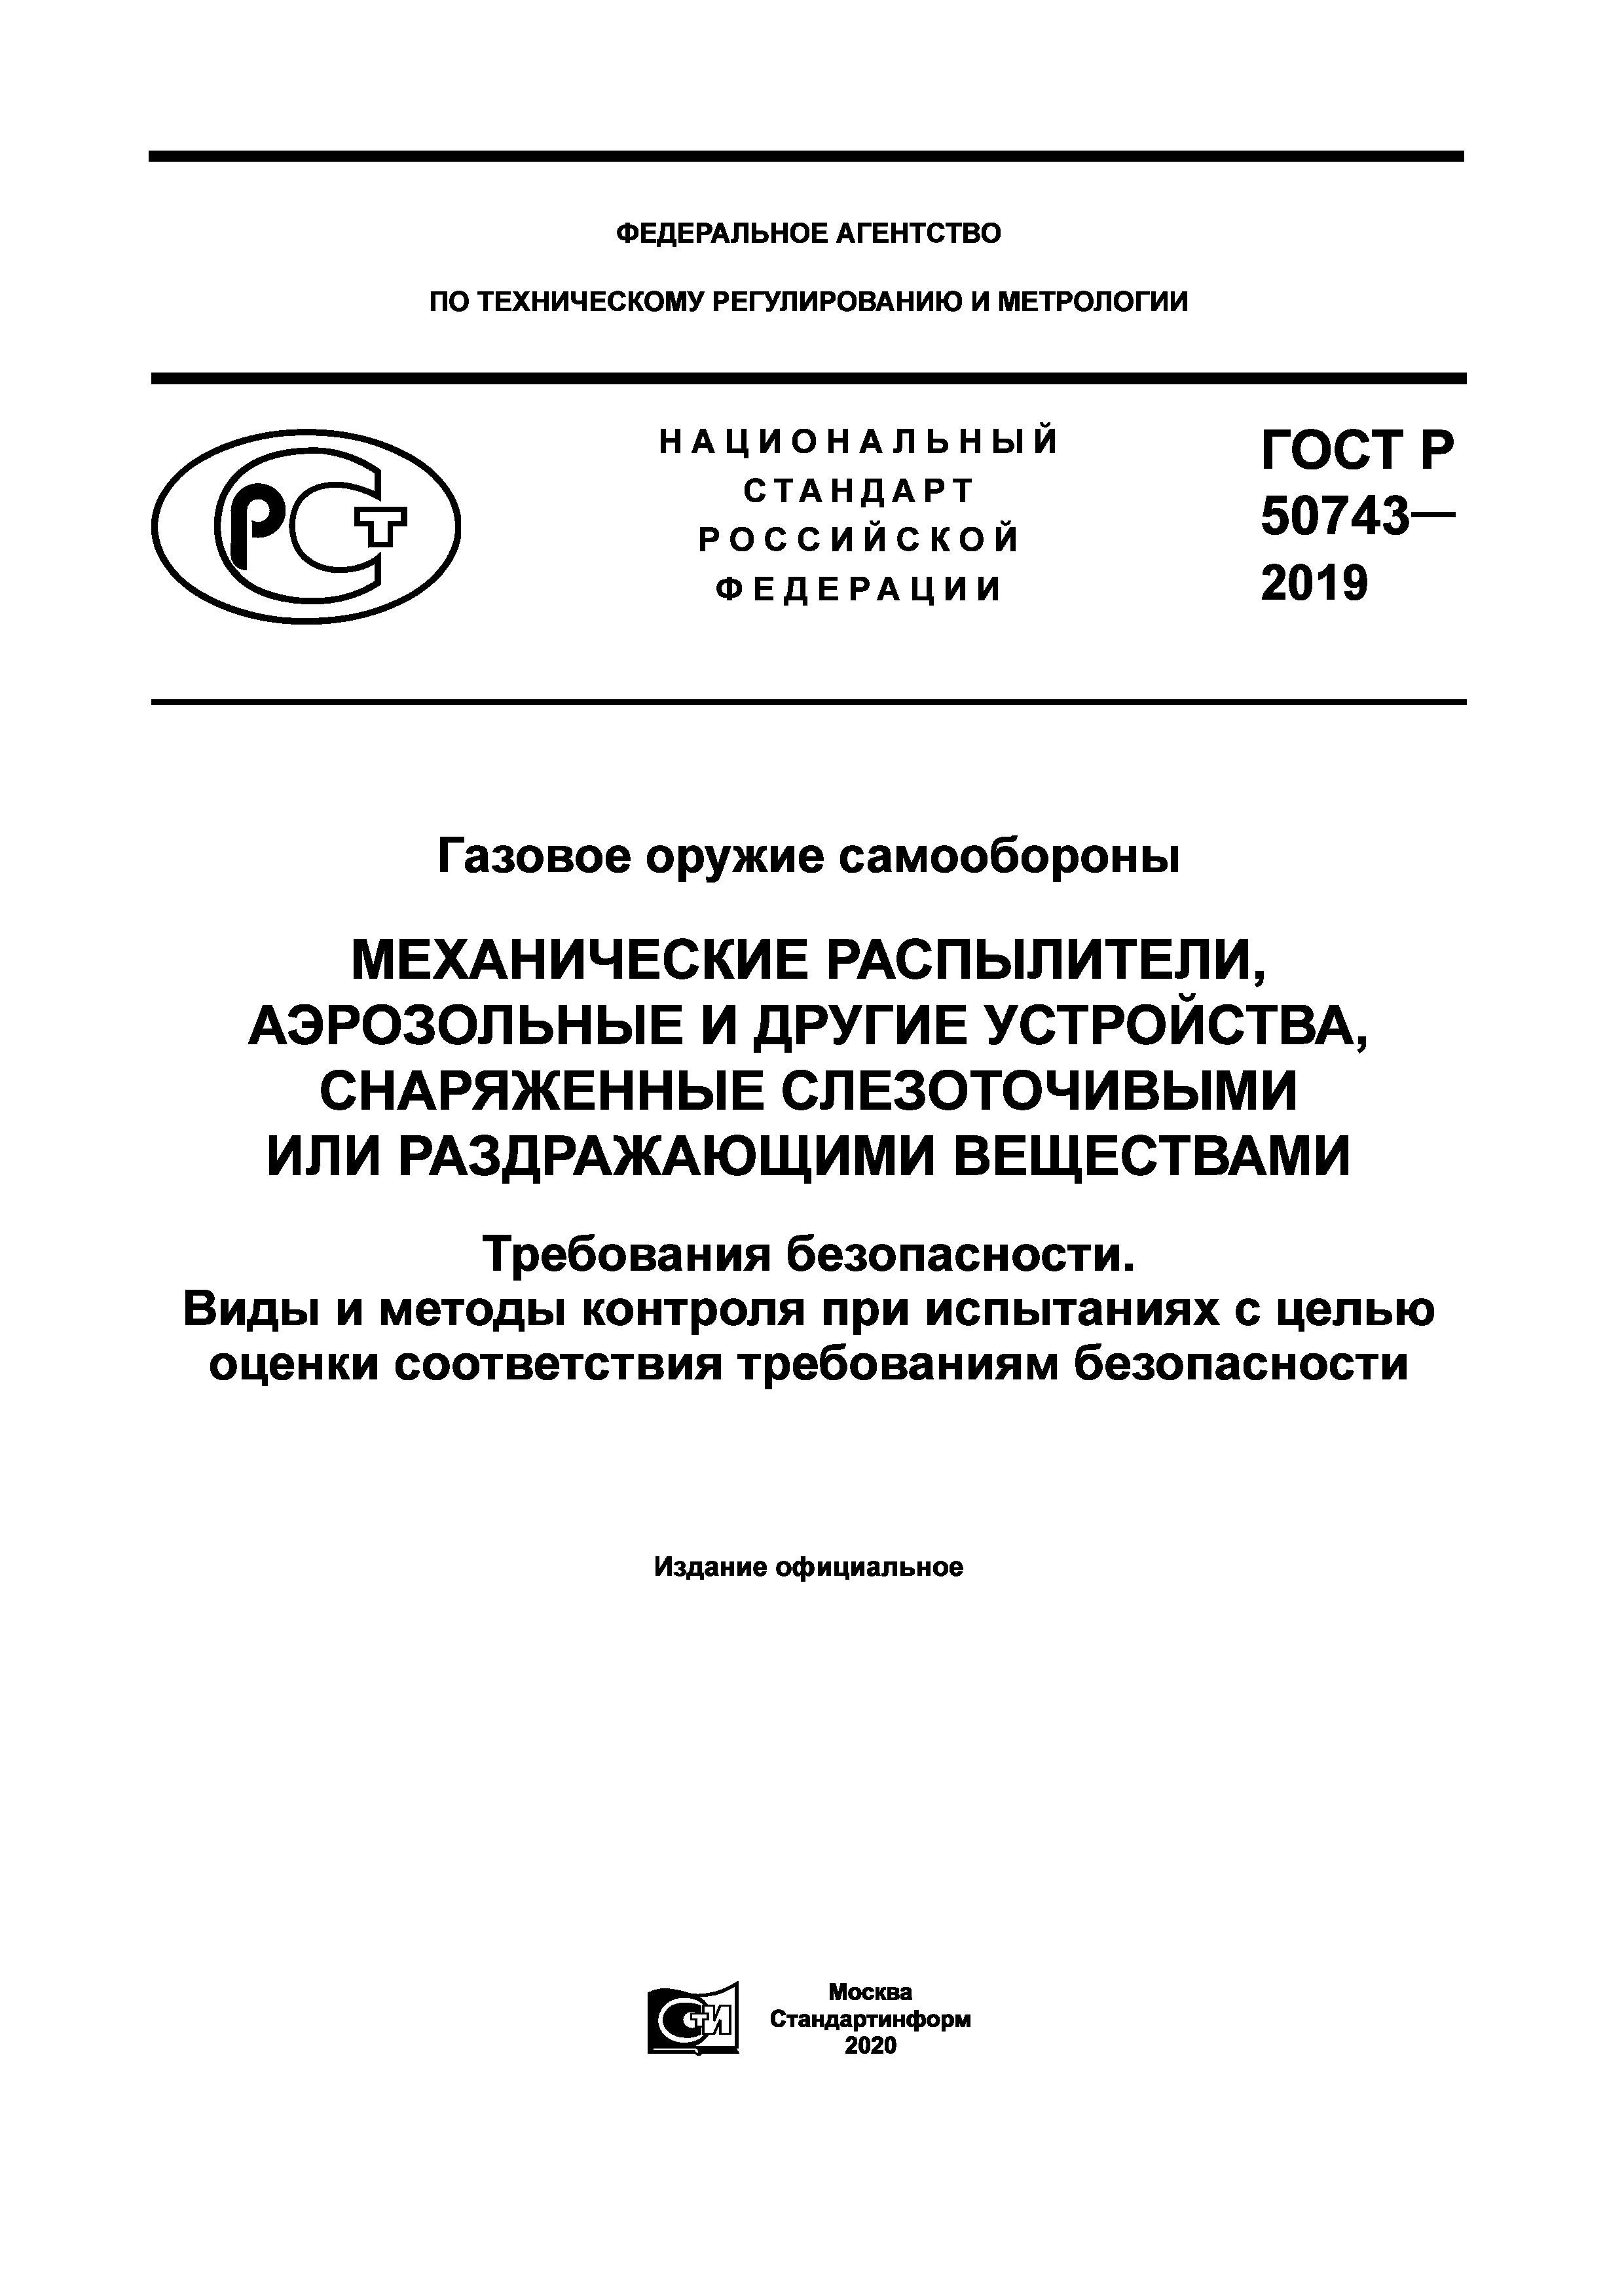 ГОСТ Р 50743-2019